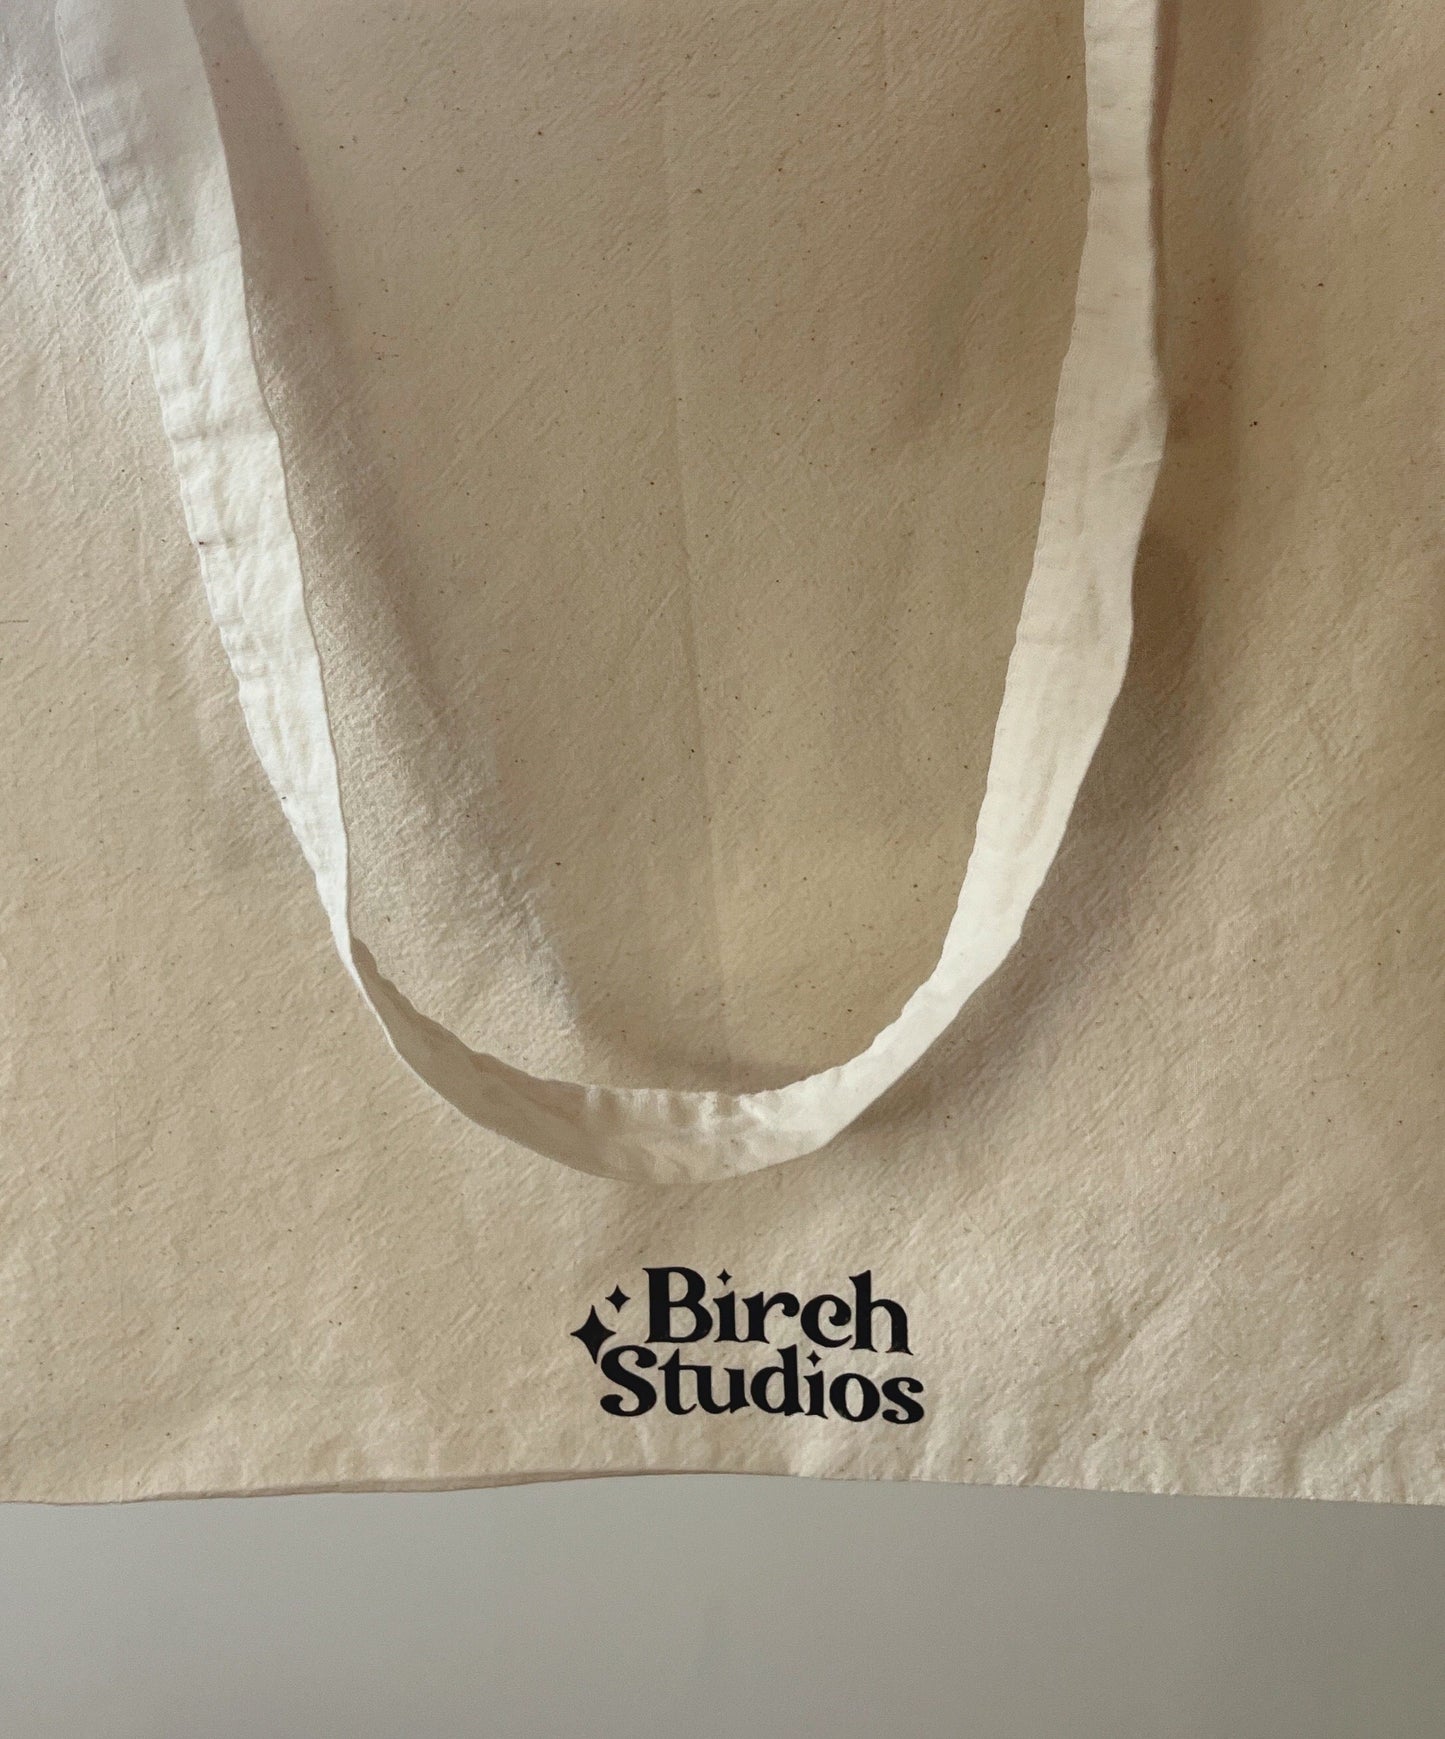 Say It's Carol Singers Tote Bag | A Very Merry Birch Studios Christmas